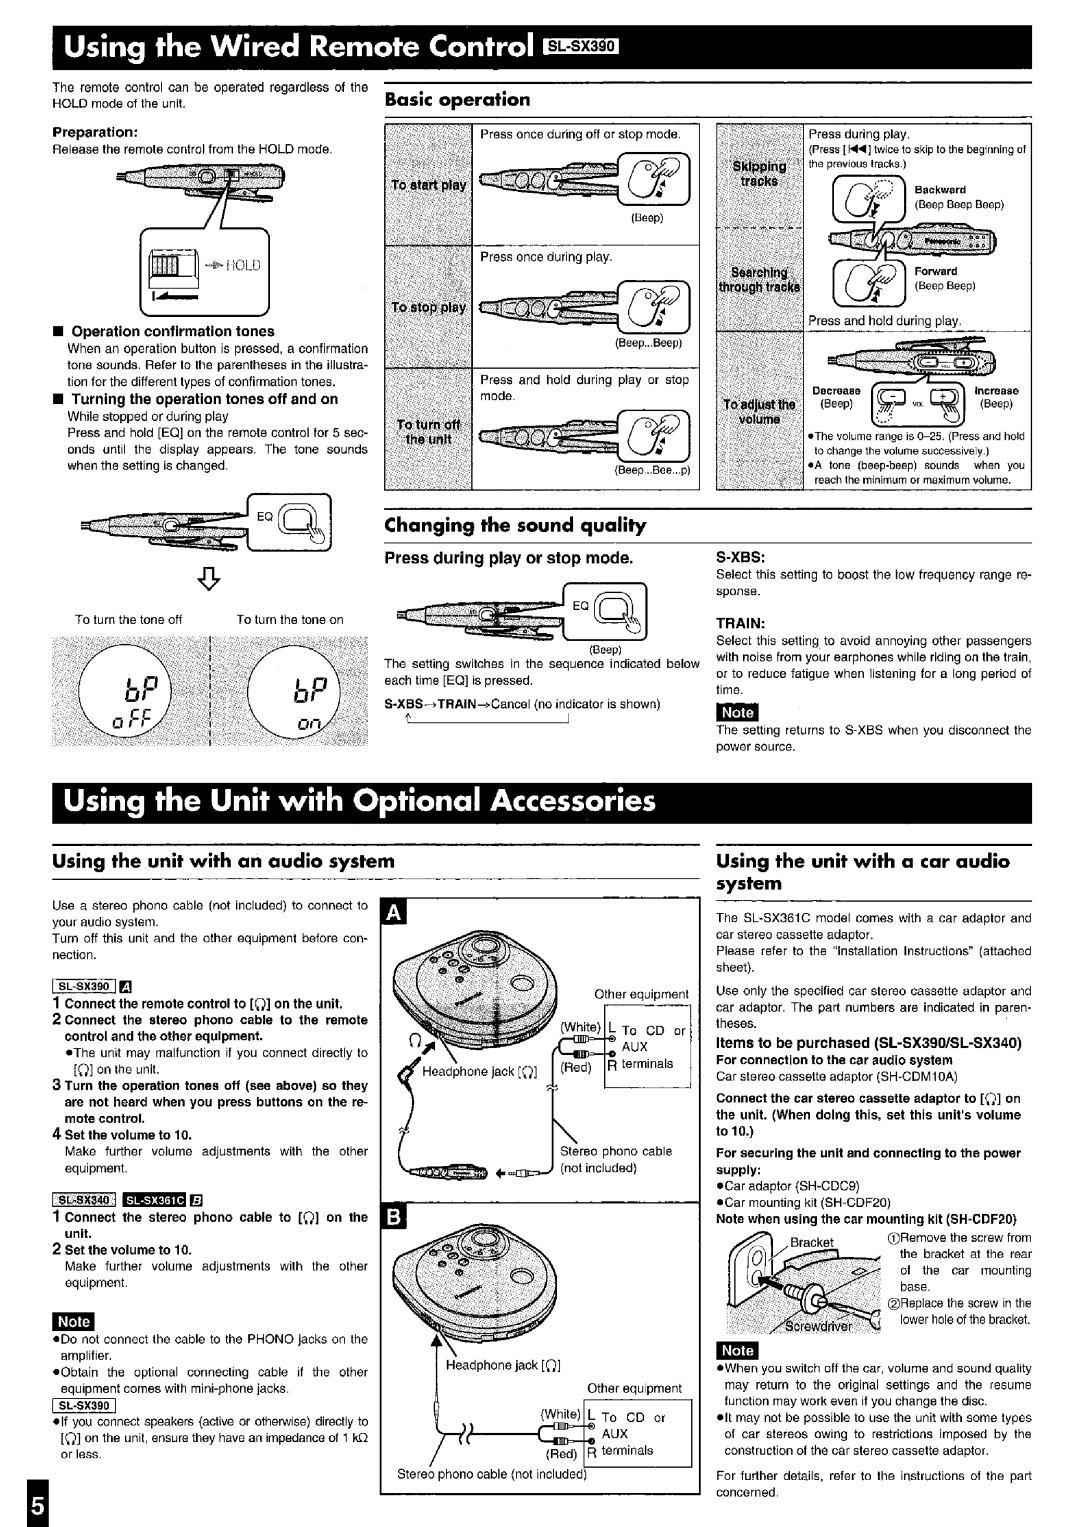 Panasonic SL-SX340, SL-SX361C manual 